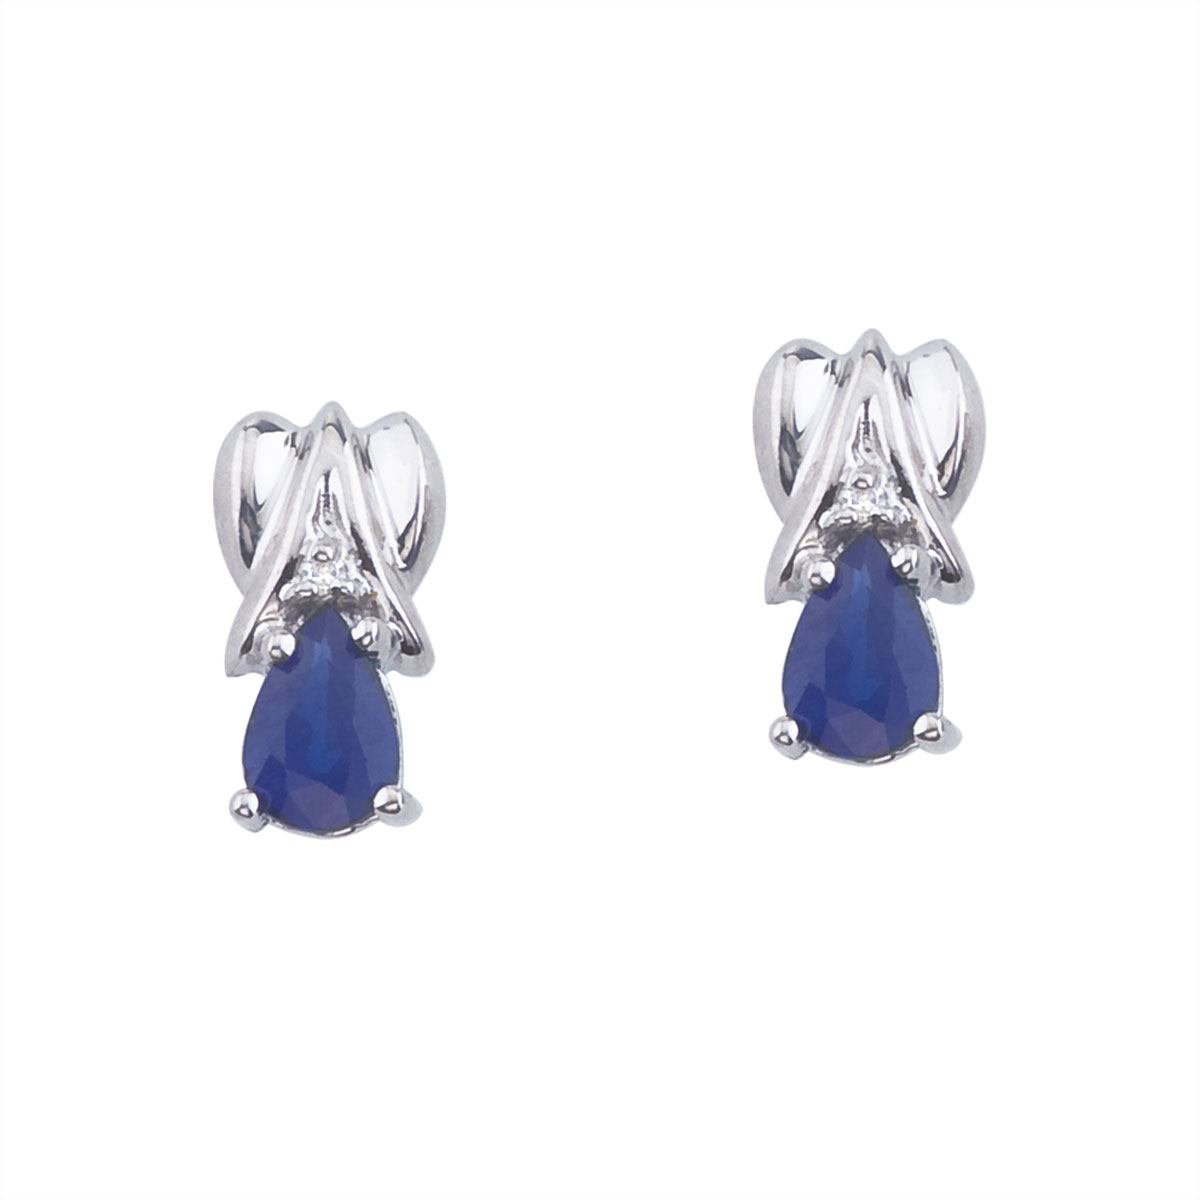 JCX2295: 14k White Gold Pear-Shaped Sapphire and Diamond Stud Earrings